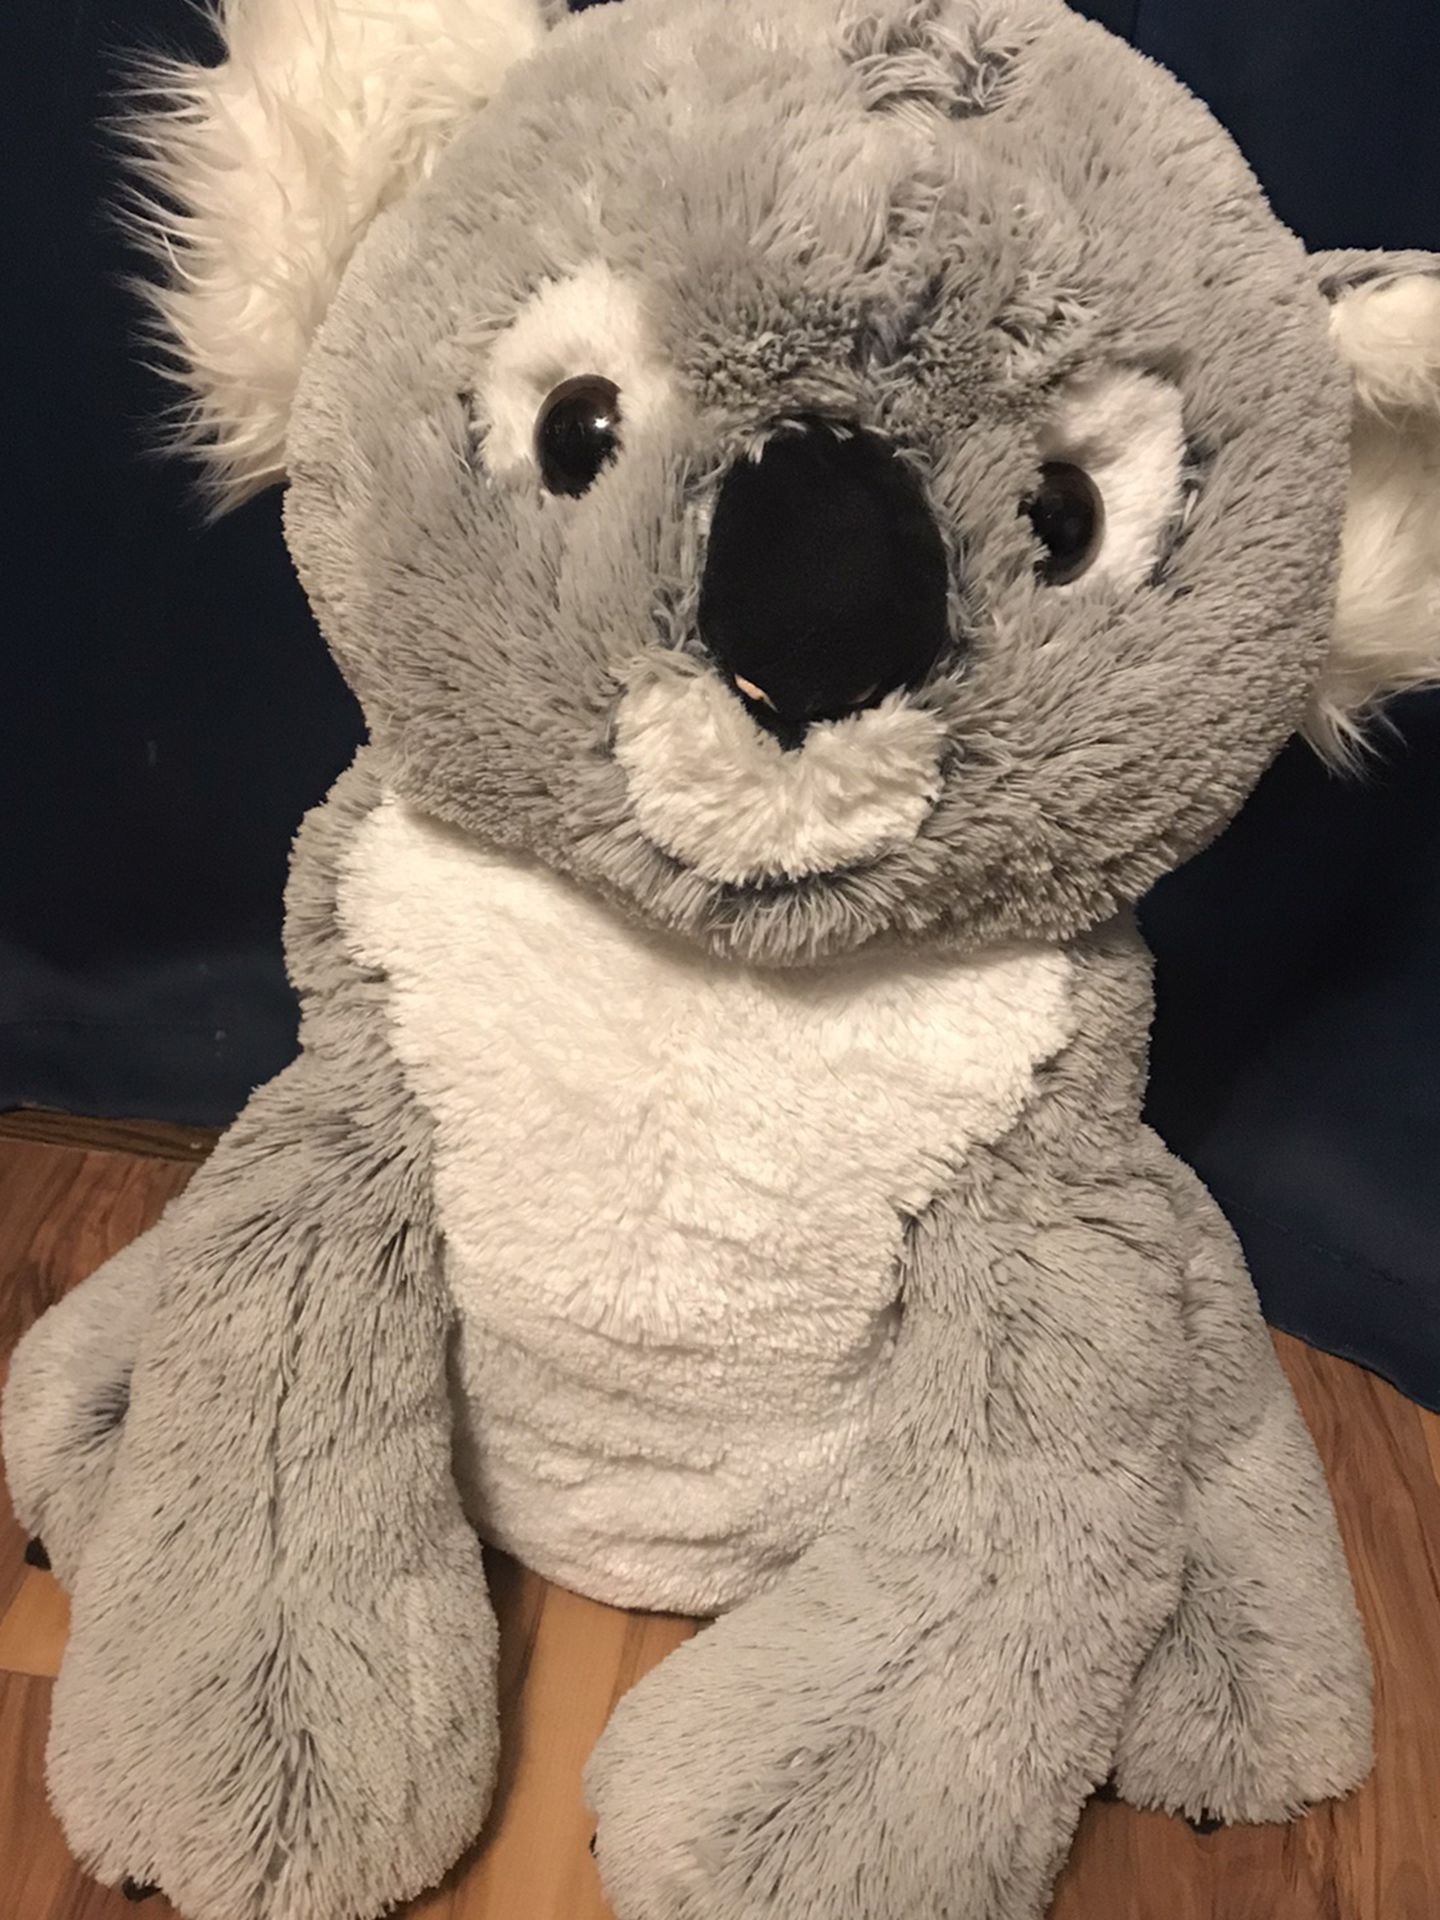 Large 25” Stuffed Koala - Very Soft And Clean! By Hug Fun